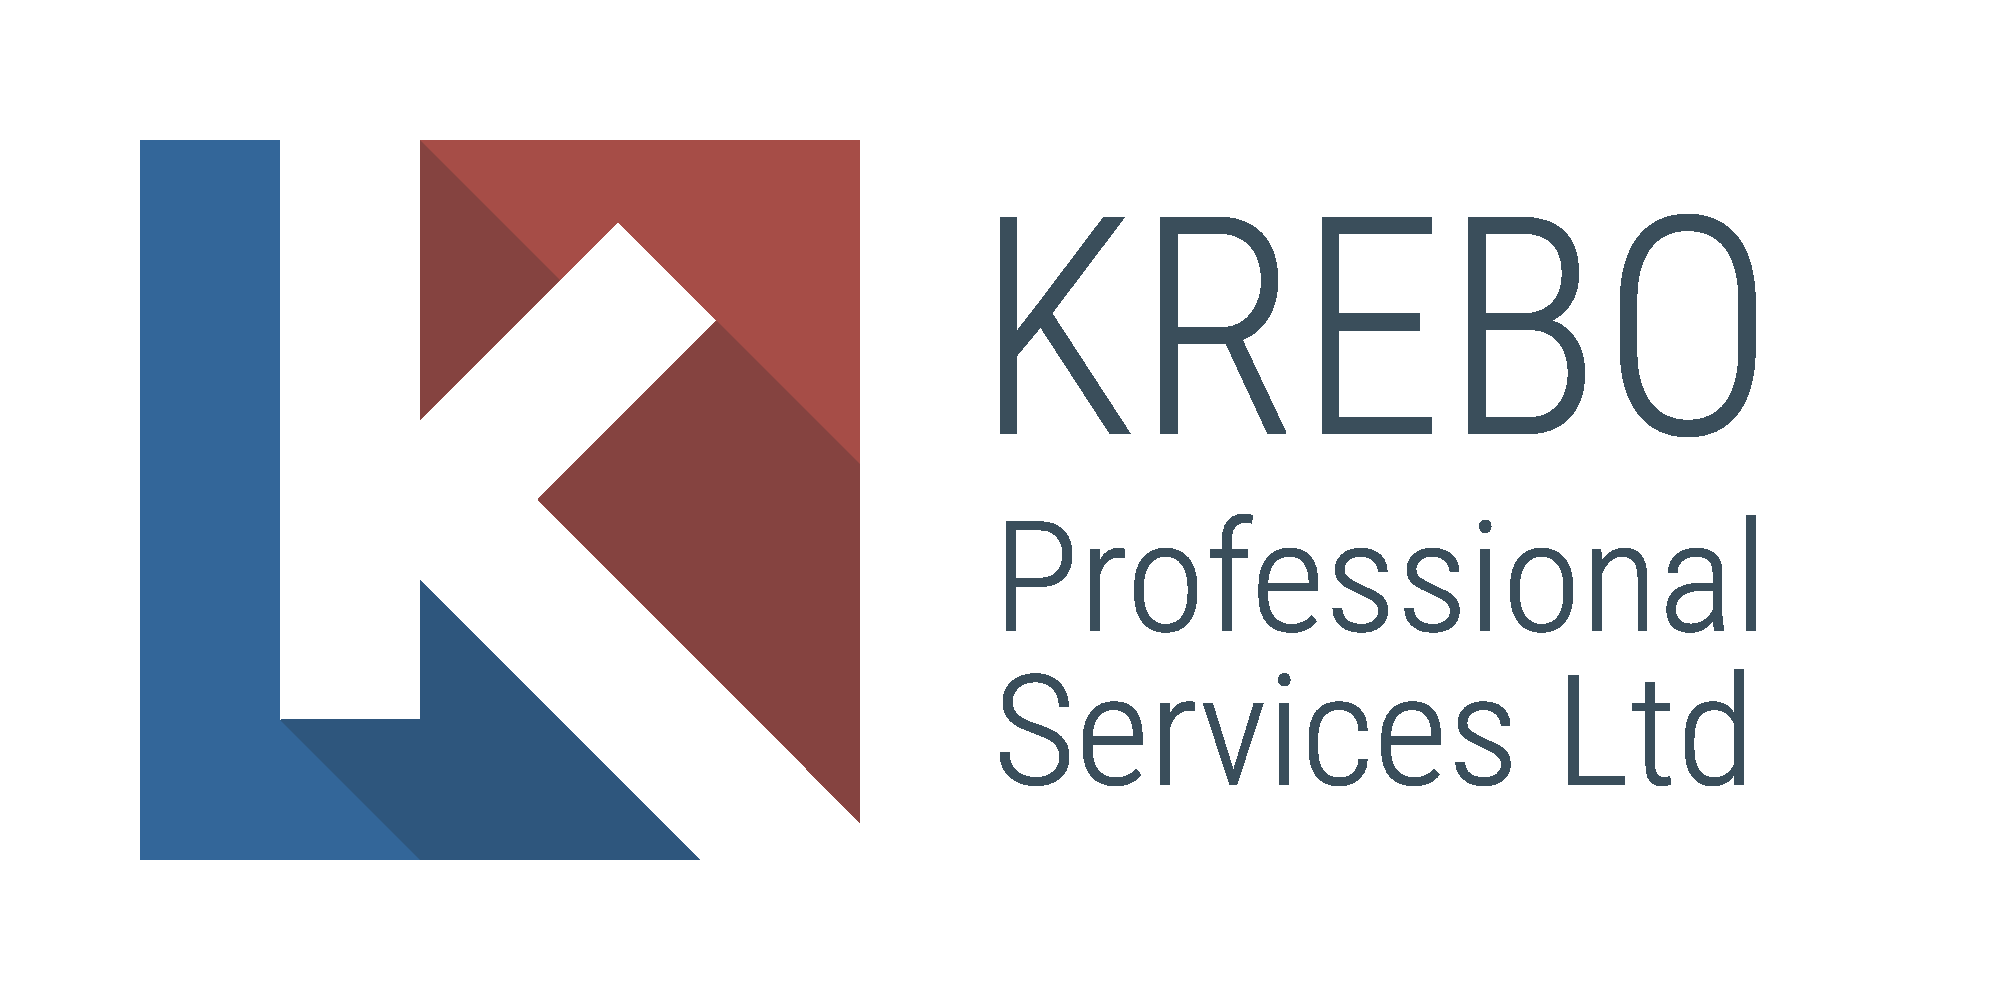 KREBO Professional Services